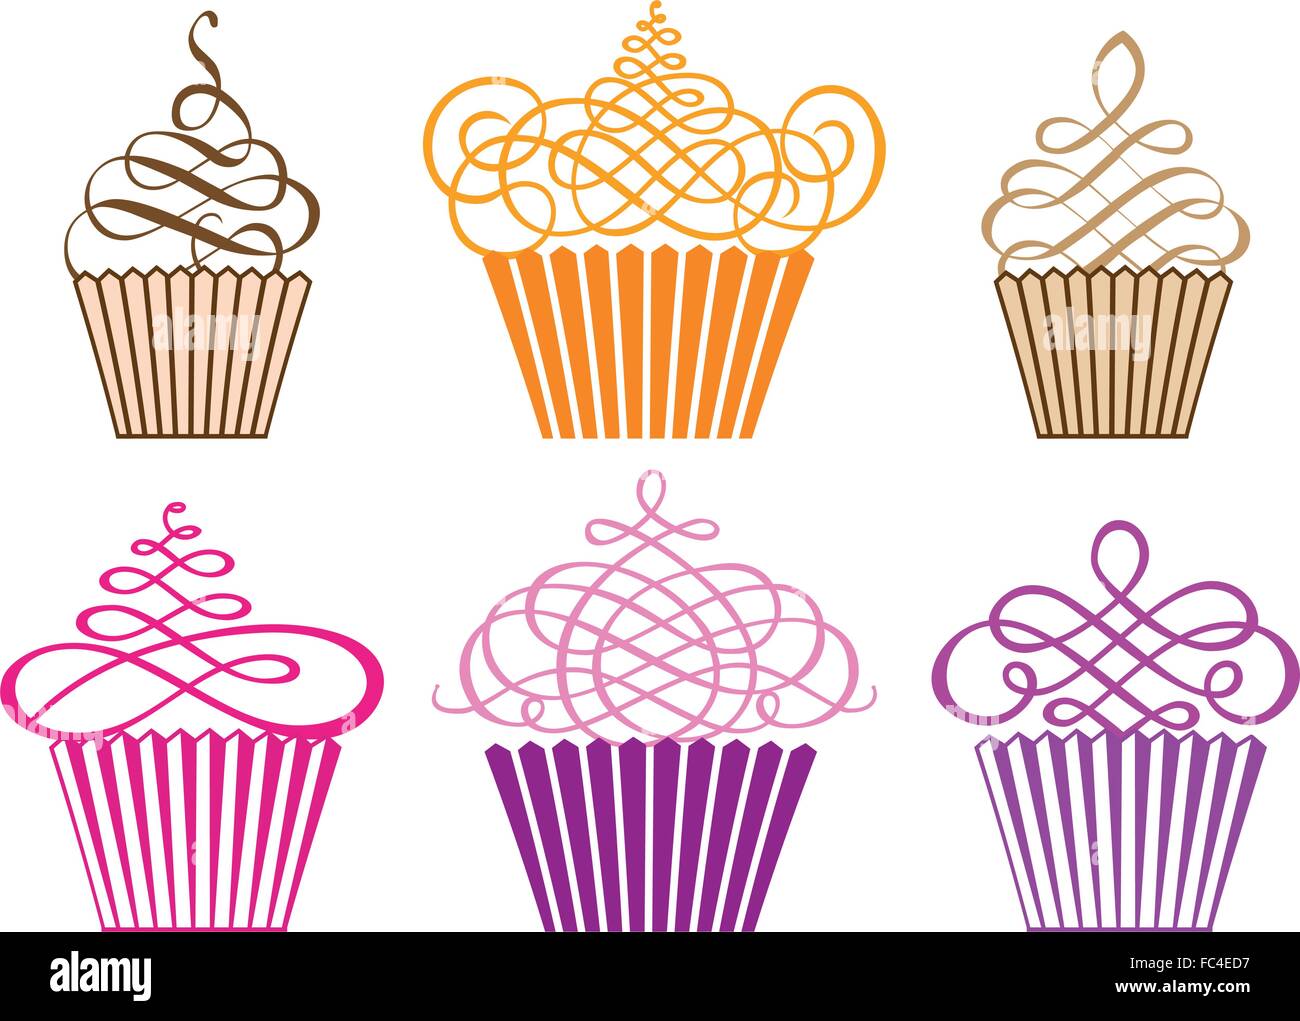 set of decorative cupcake designs, vector illustration Stock Vector